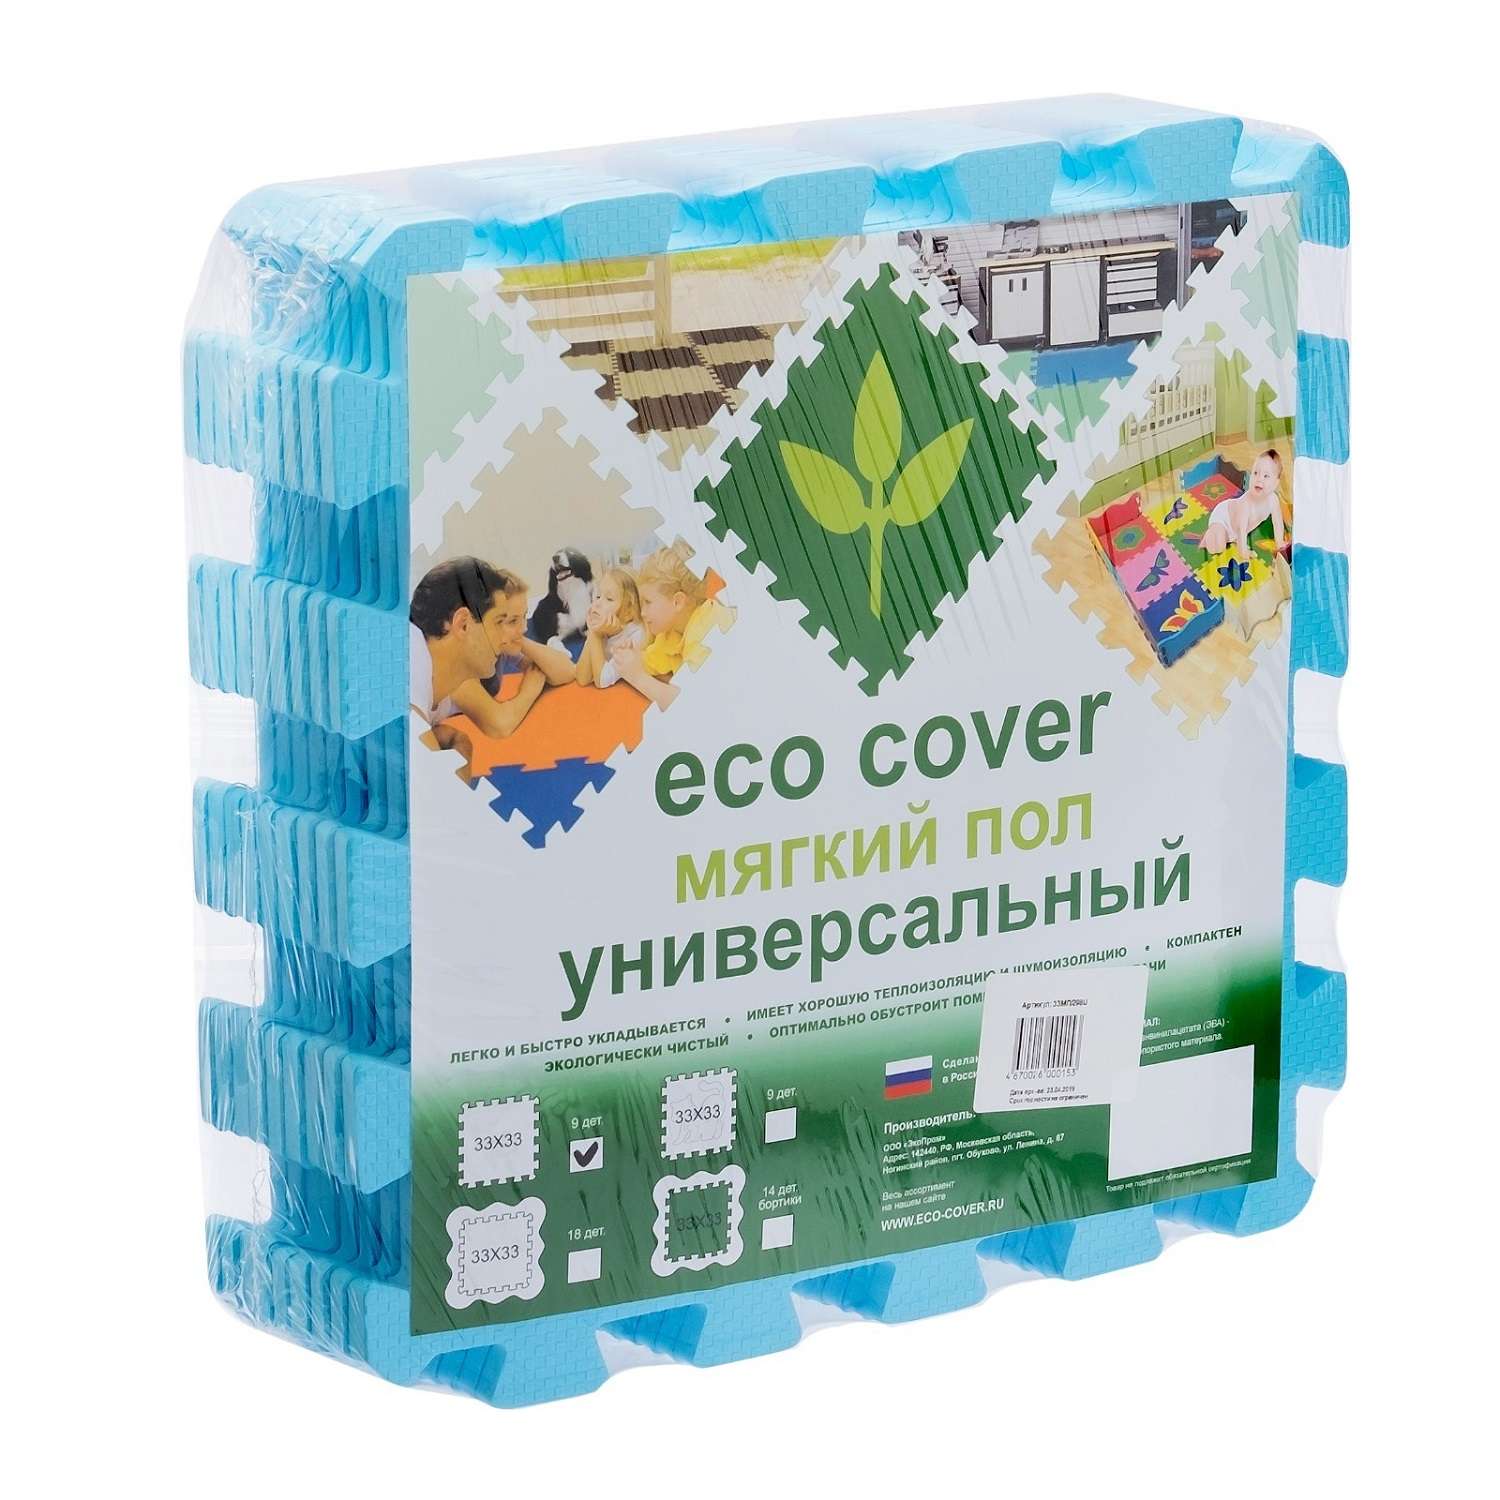 Развивающий детский коврик Eco cover мягкий пол голубой 33х33 - фото 2